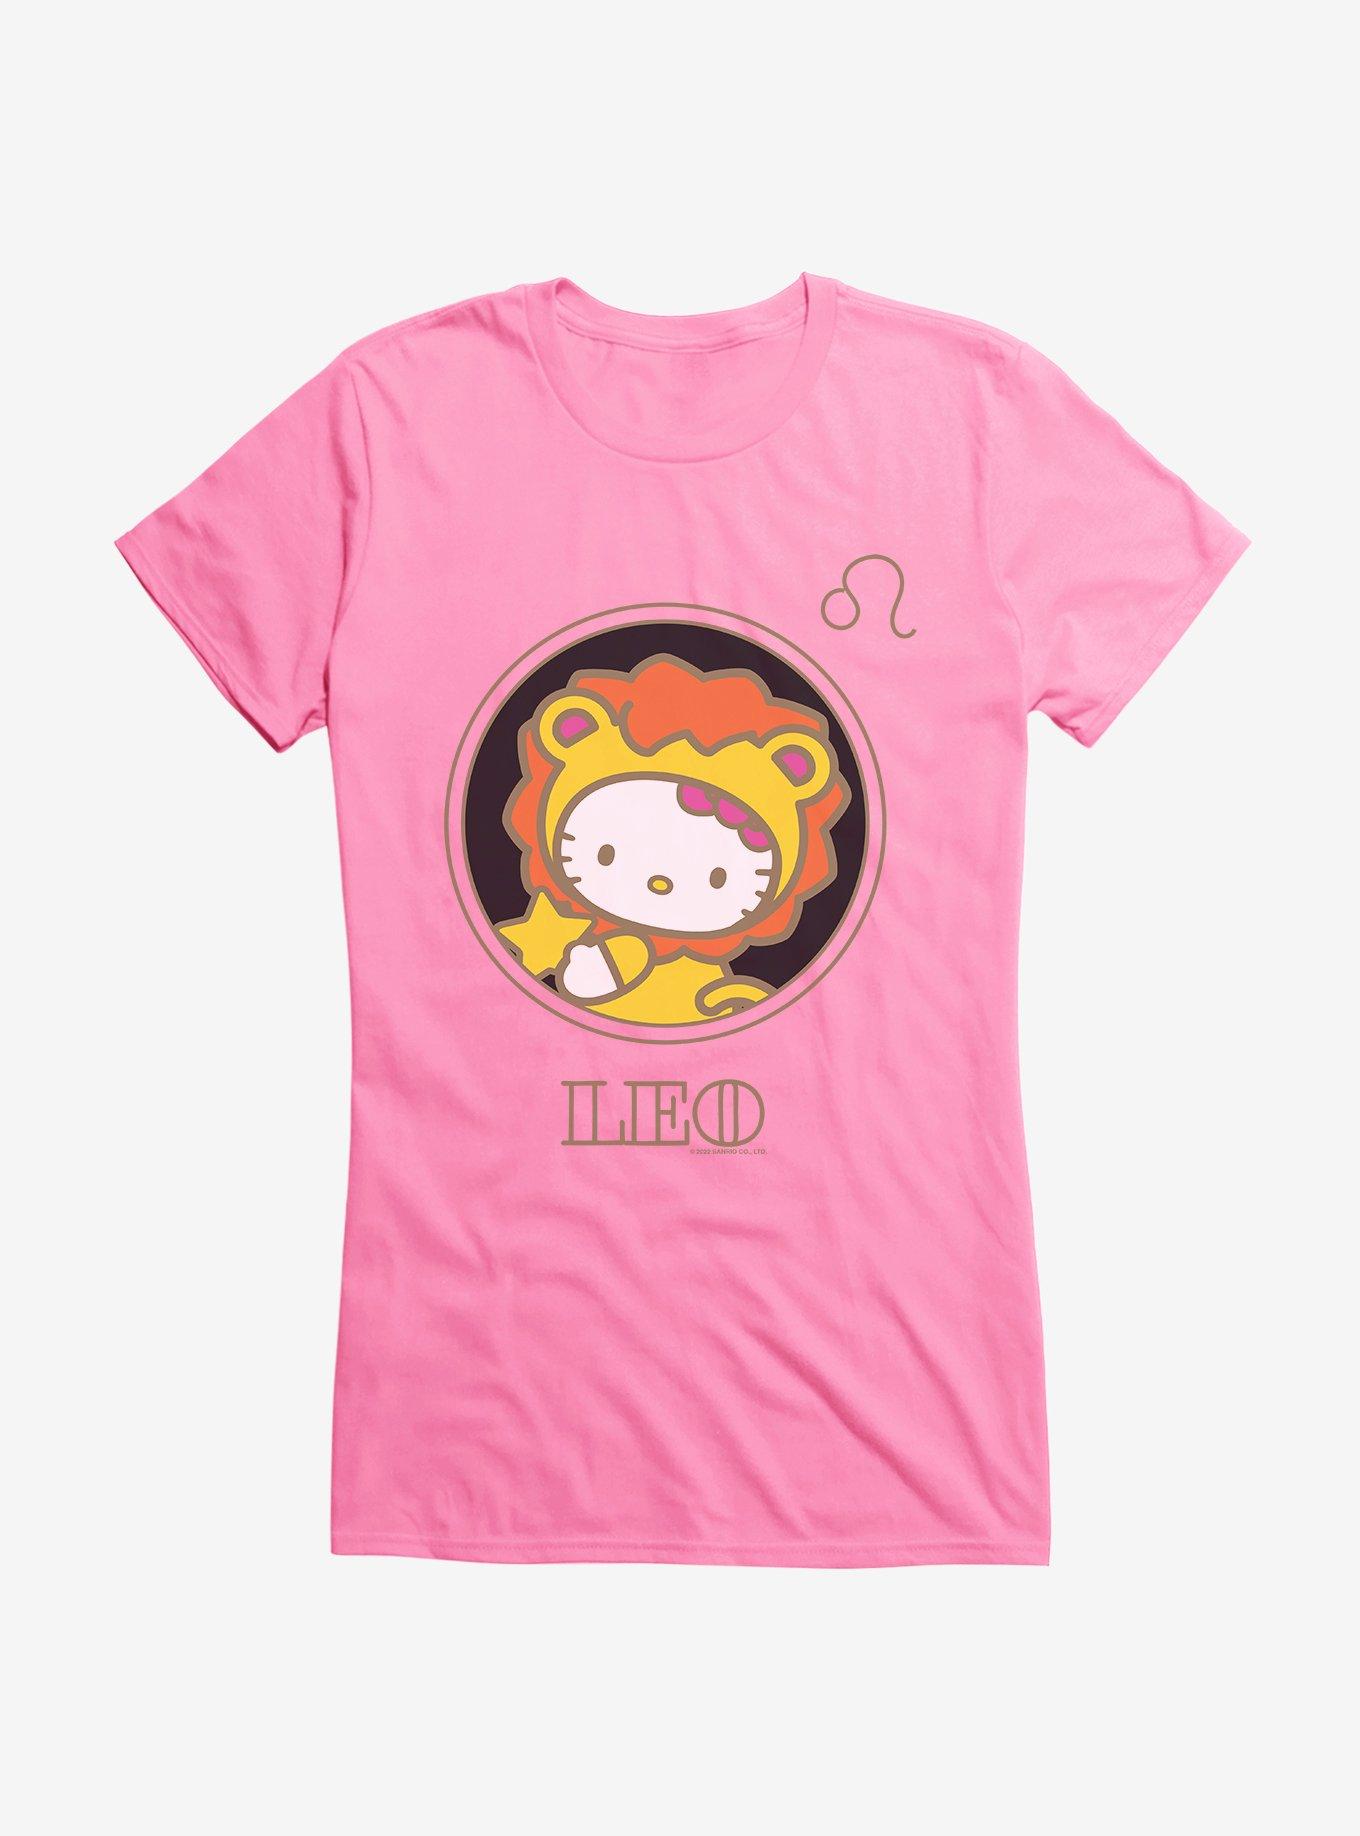 Hello Kitty Star Sign Leo Stencil Girls T-Shirt